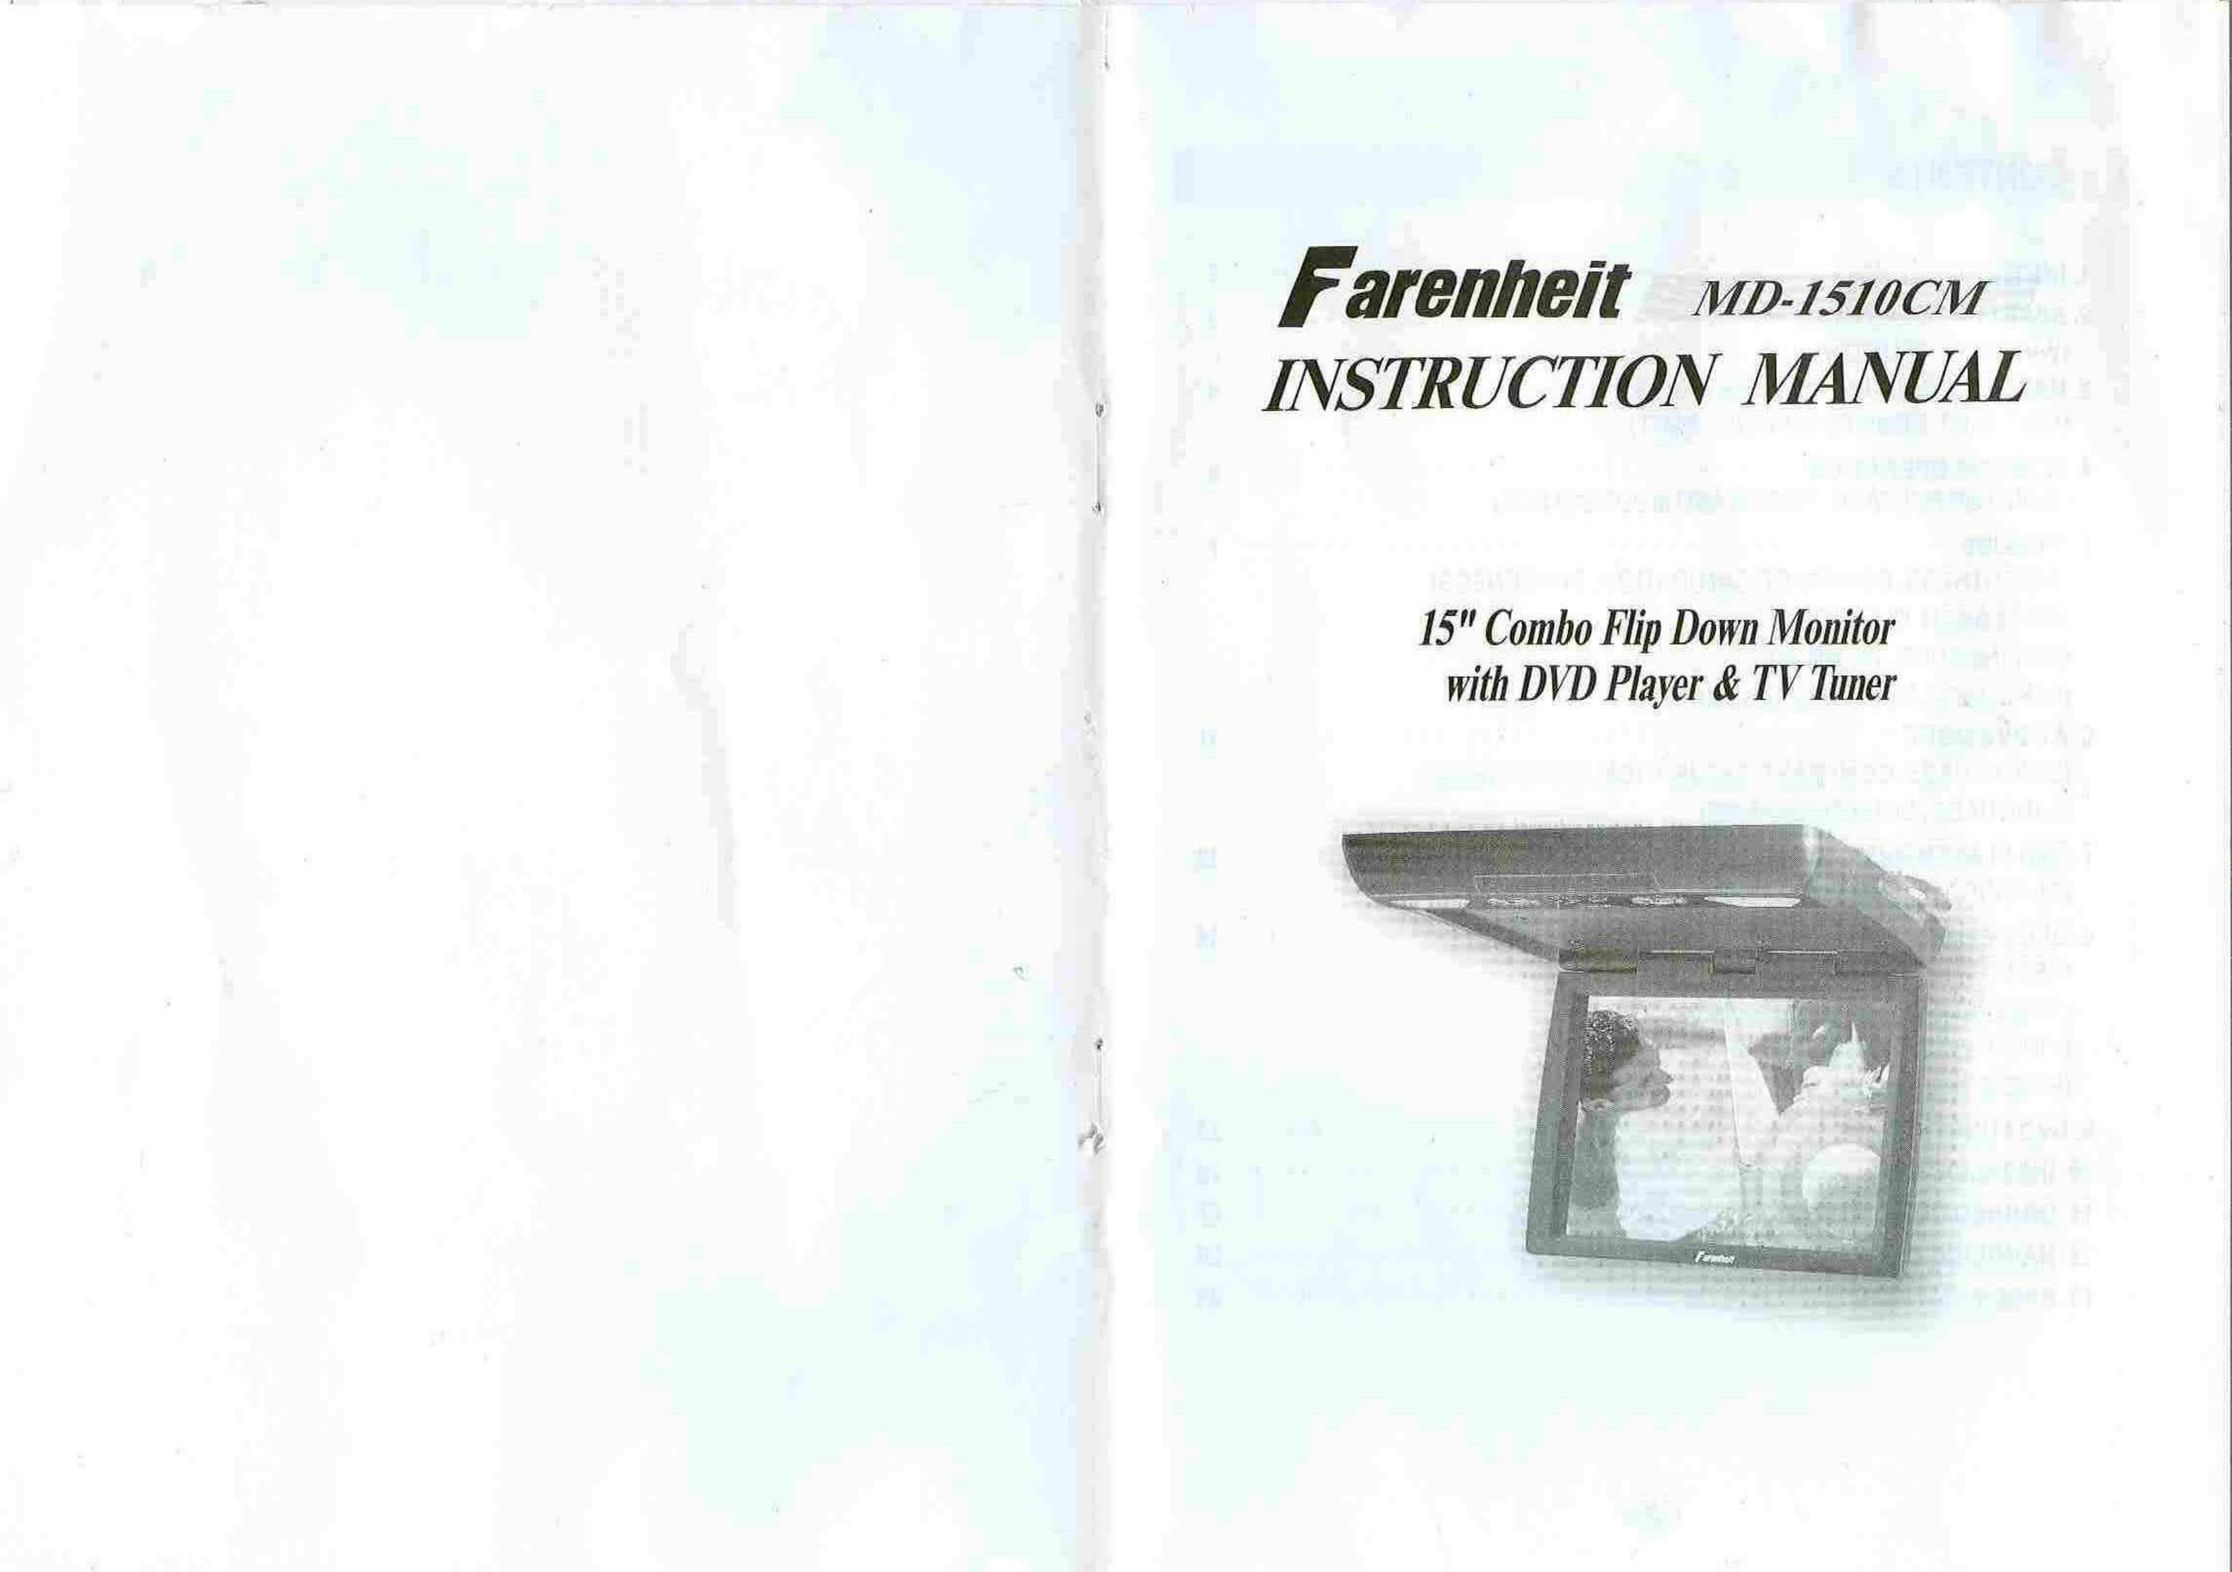 Farenheit Technologies MD1510CM Car Video System User Manual